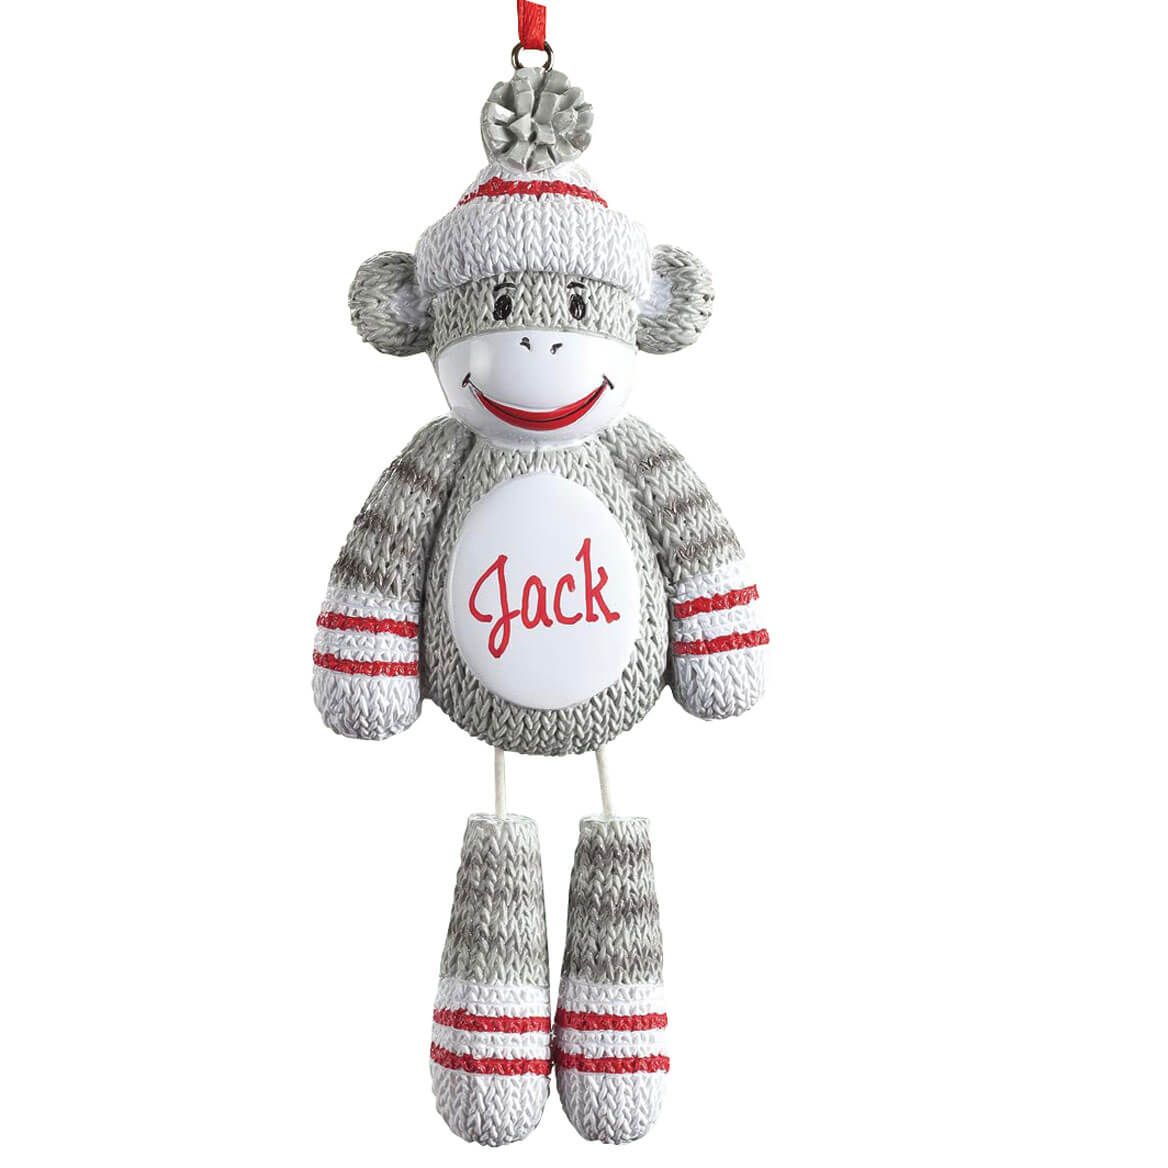 Personalized Sock Monkey Ornament + '-' + 355974